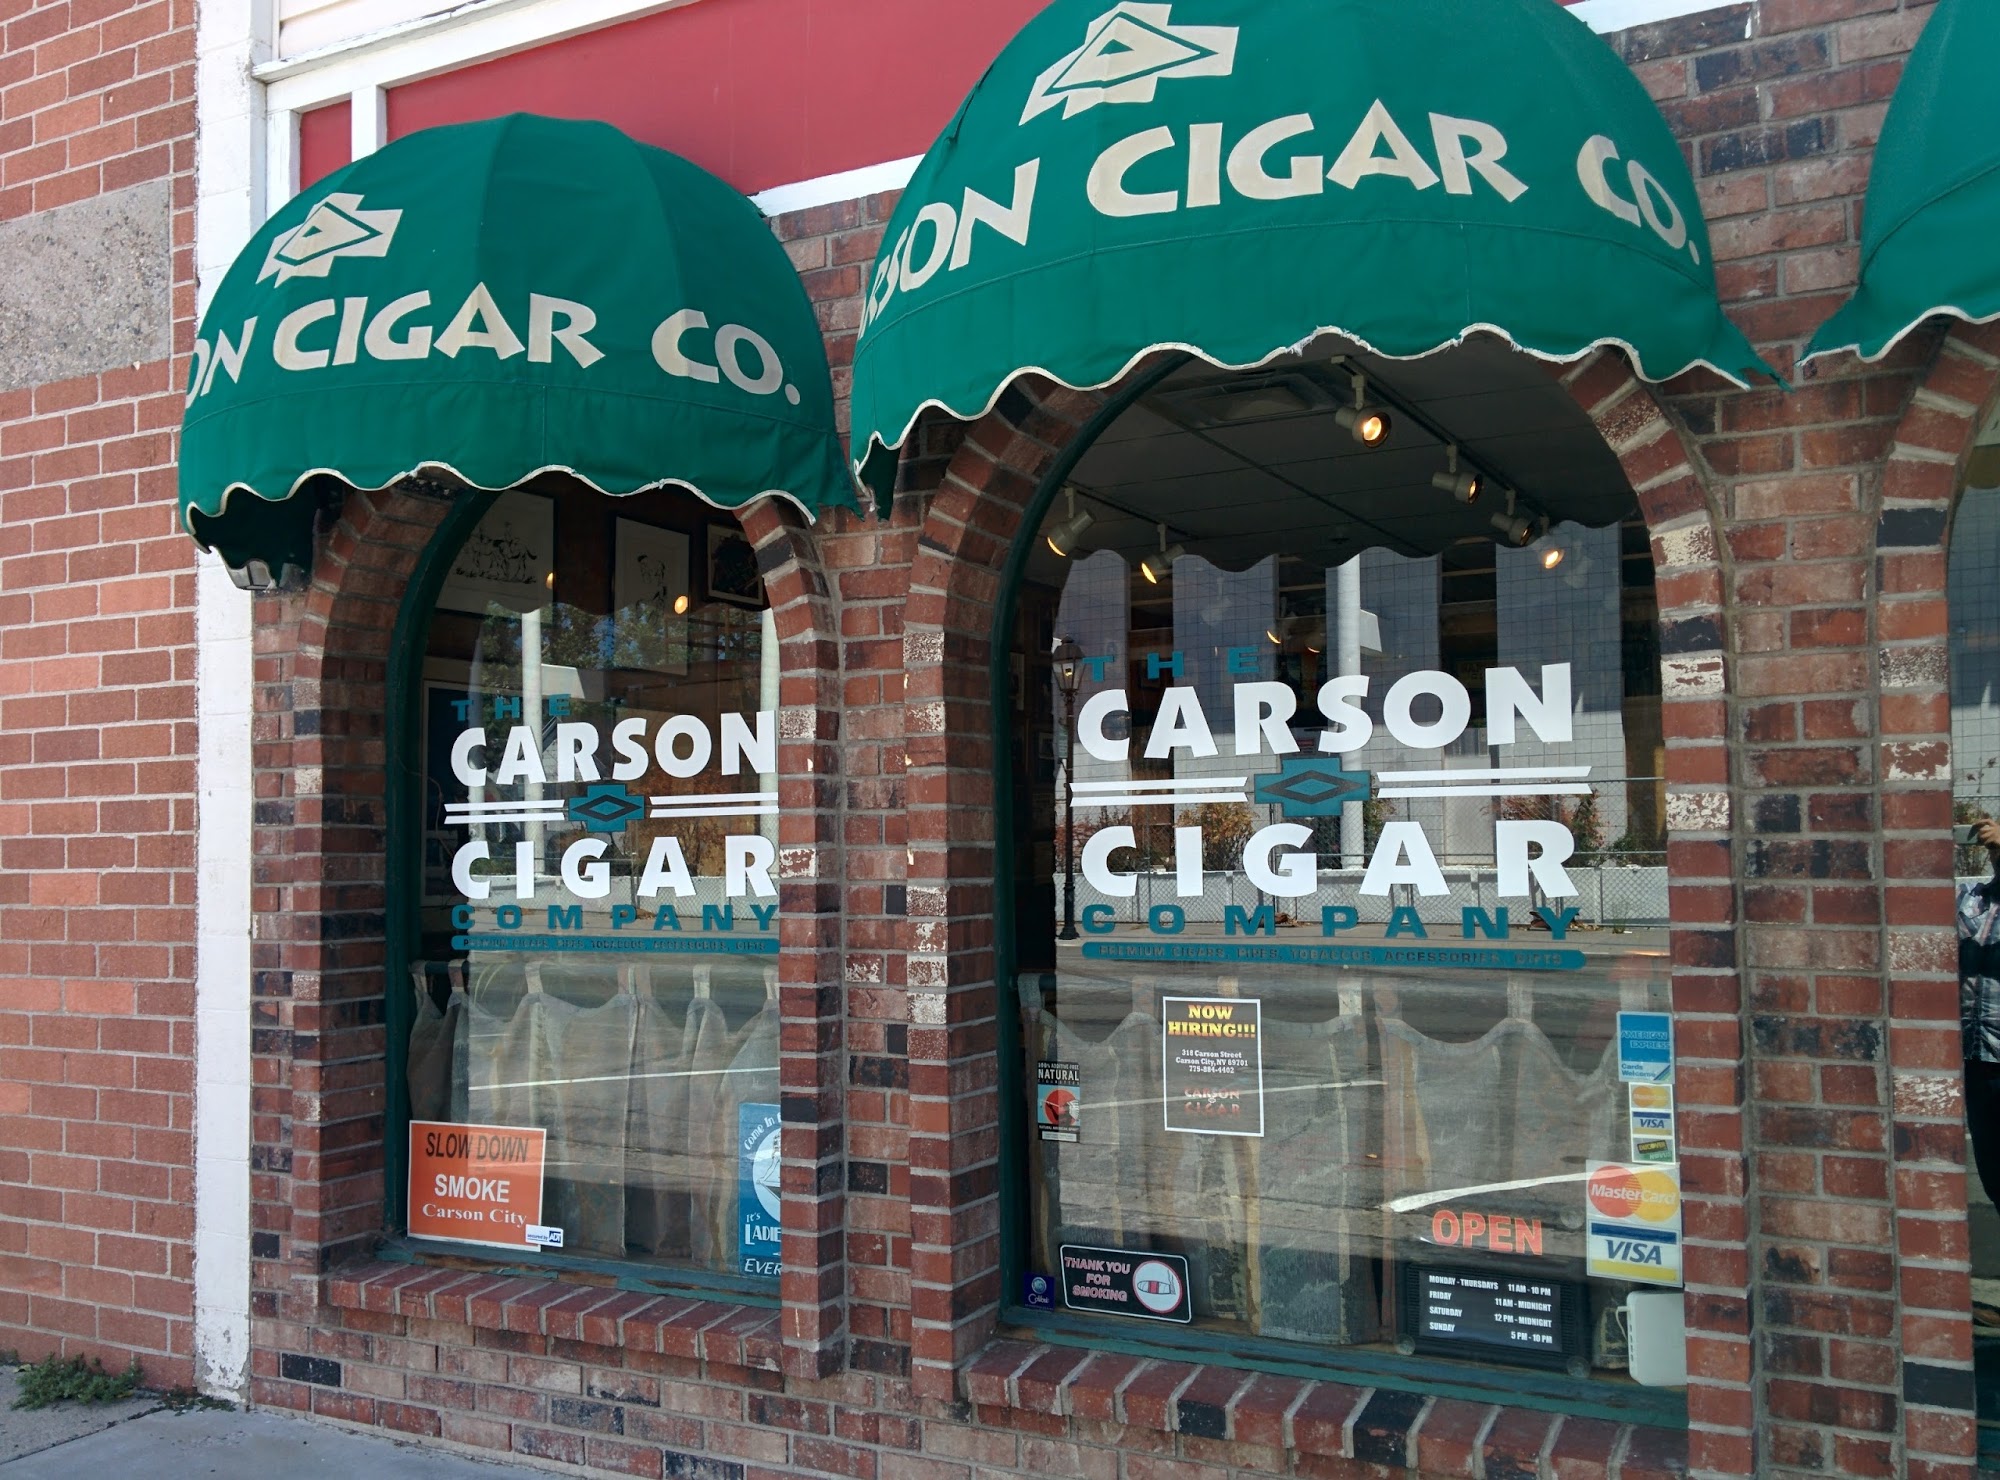 Carson Cigar Company